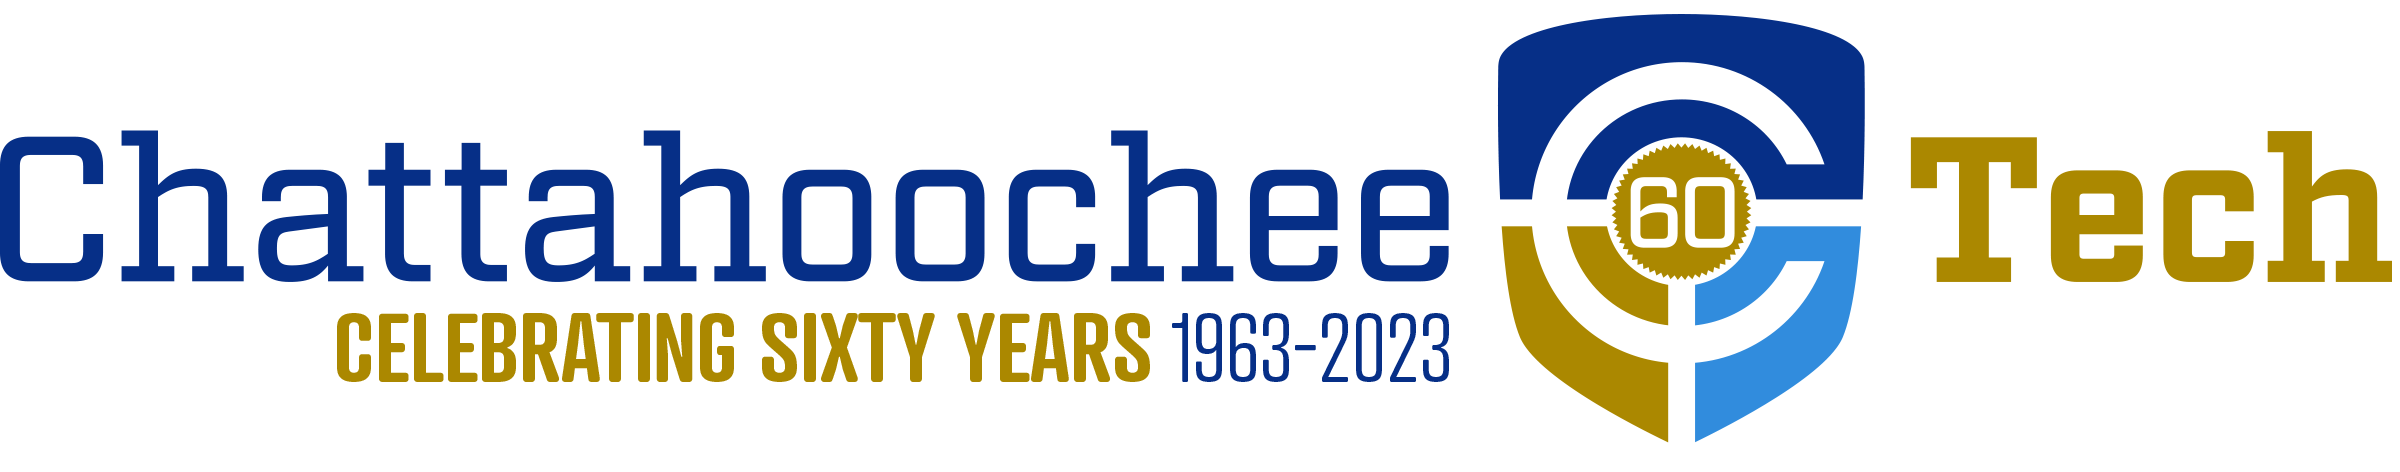 Chattahoochee Tech 60th Anniversary logo